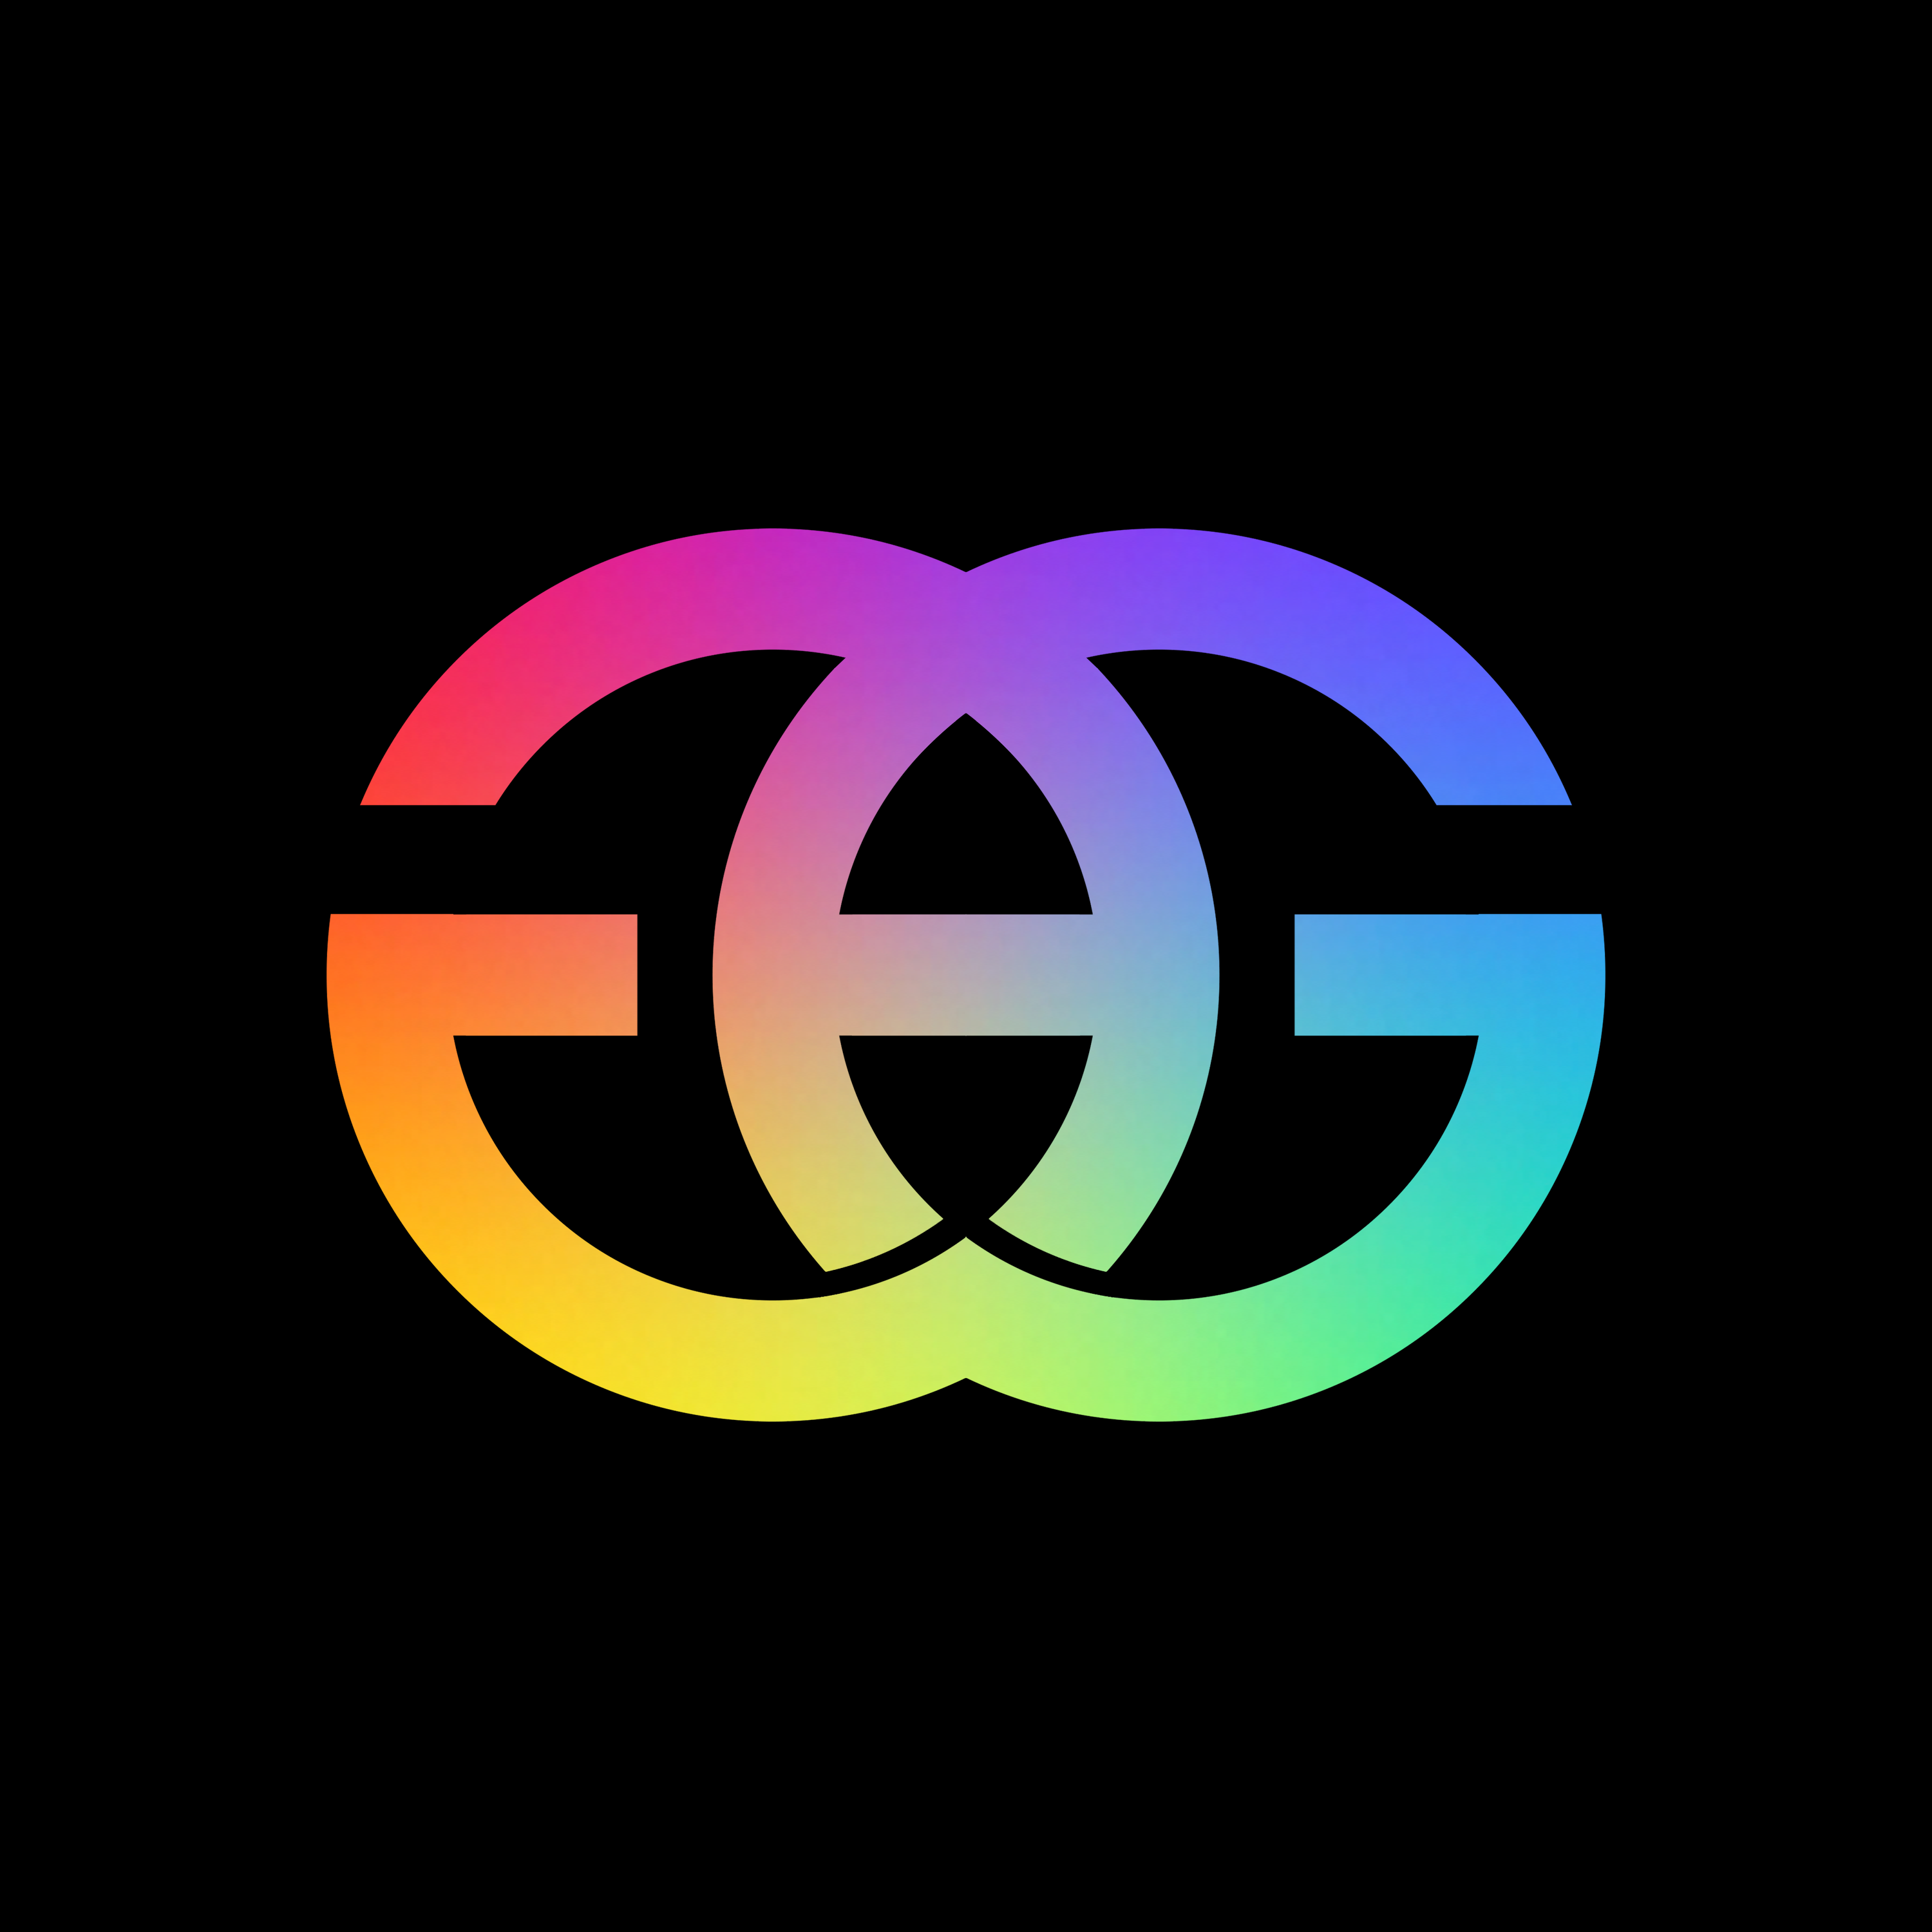 Gays Against Groomers, Inc logo